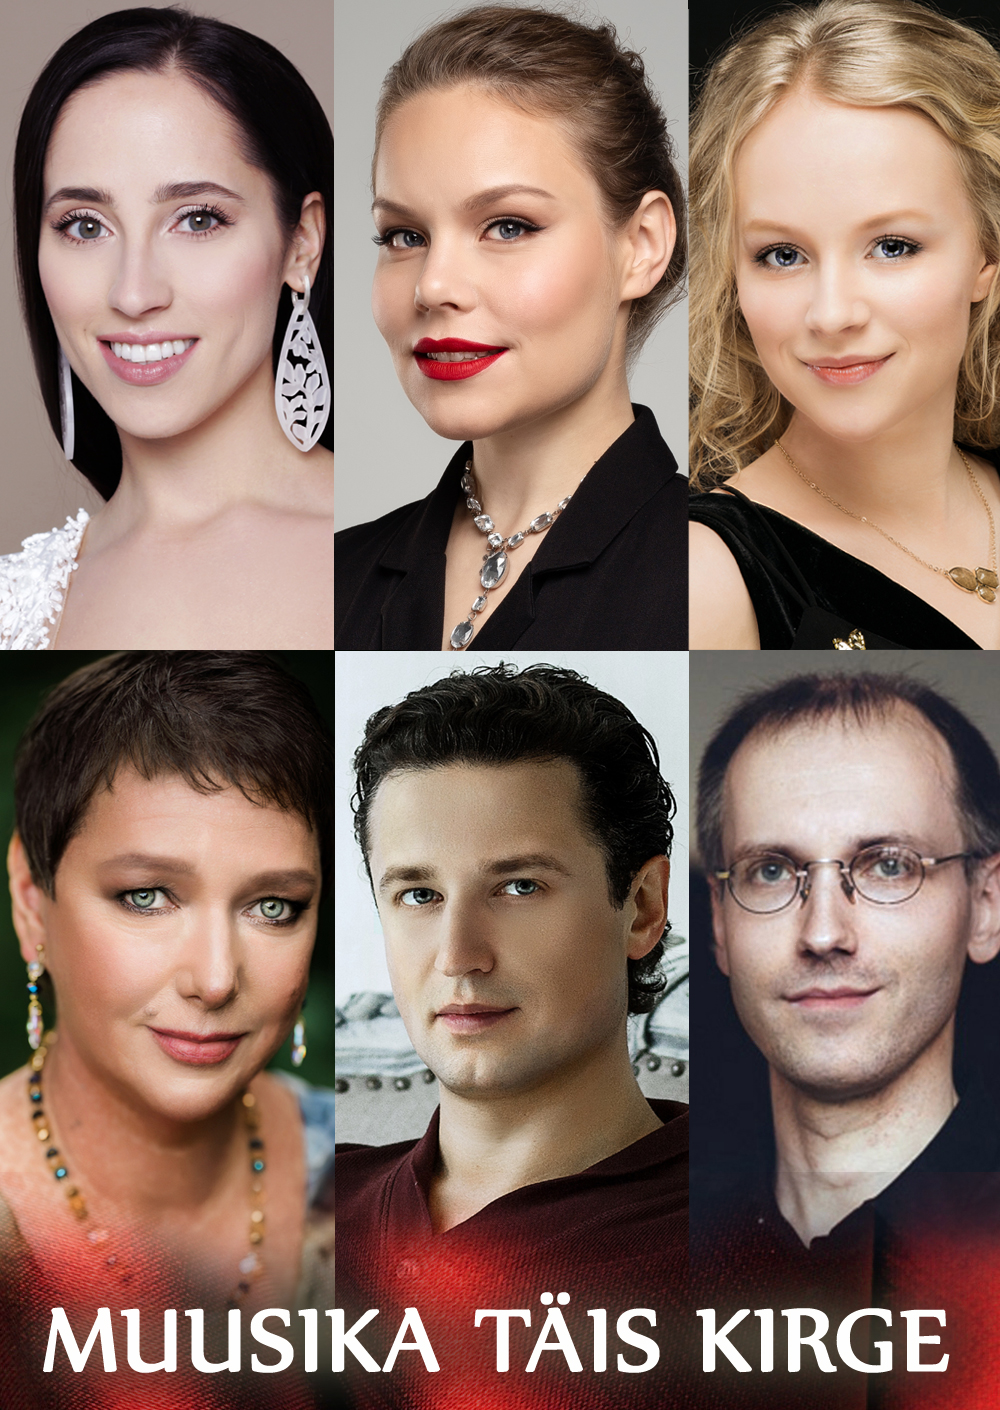 MUSIC FULL OF PASSION - Nechayeva, Rossar, Zahharova, Bogach, Lonks, Taal 